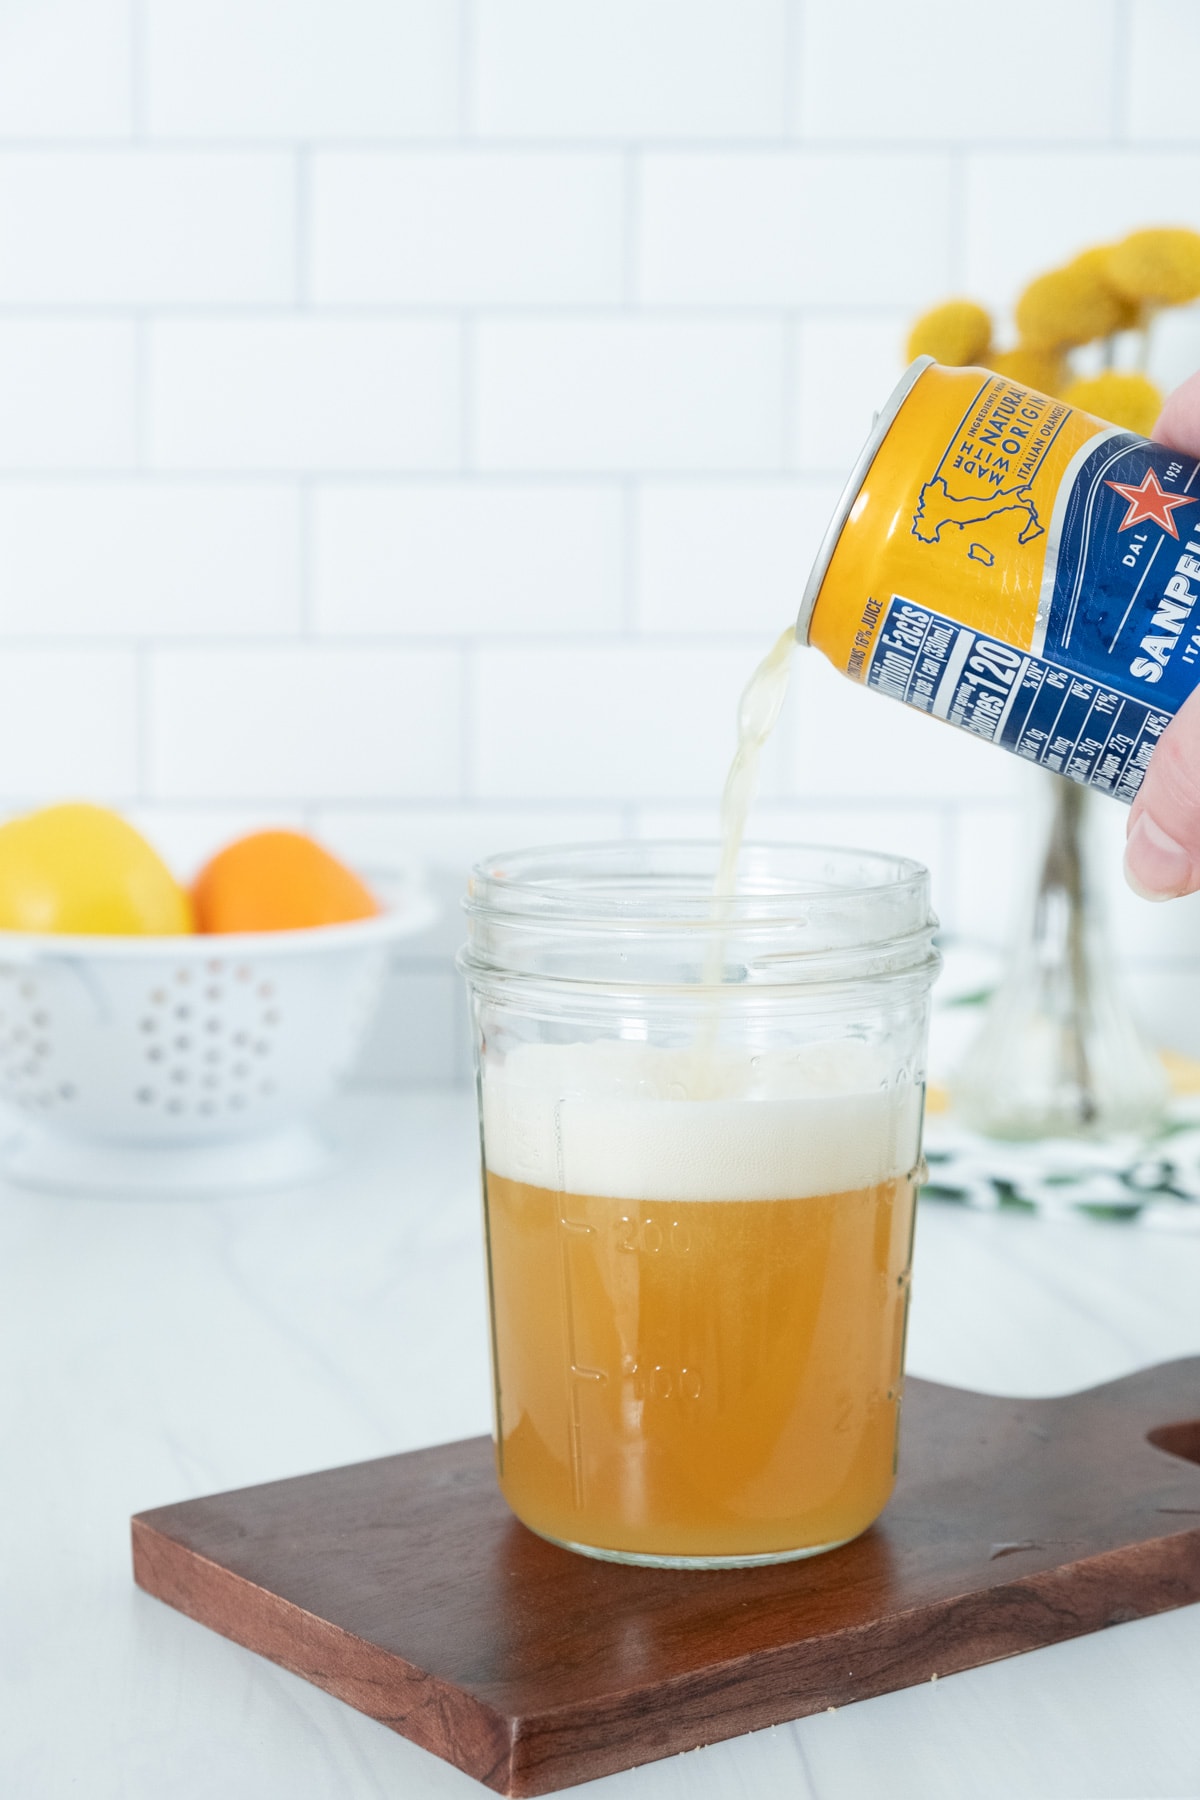 pour orange soda into a glass